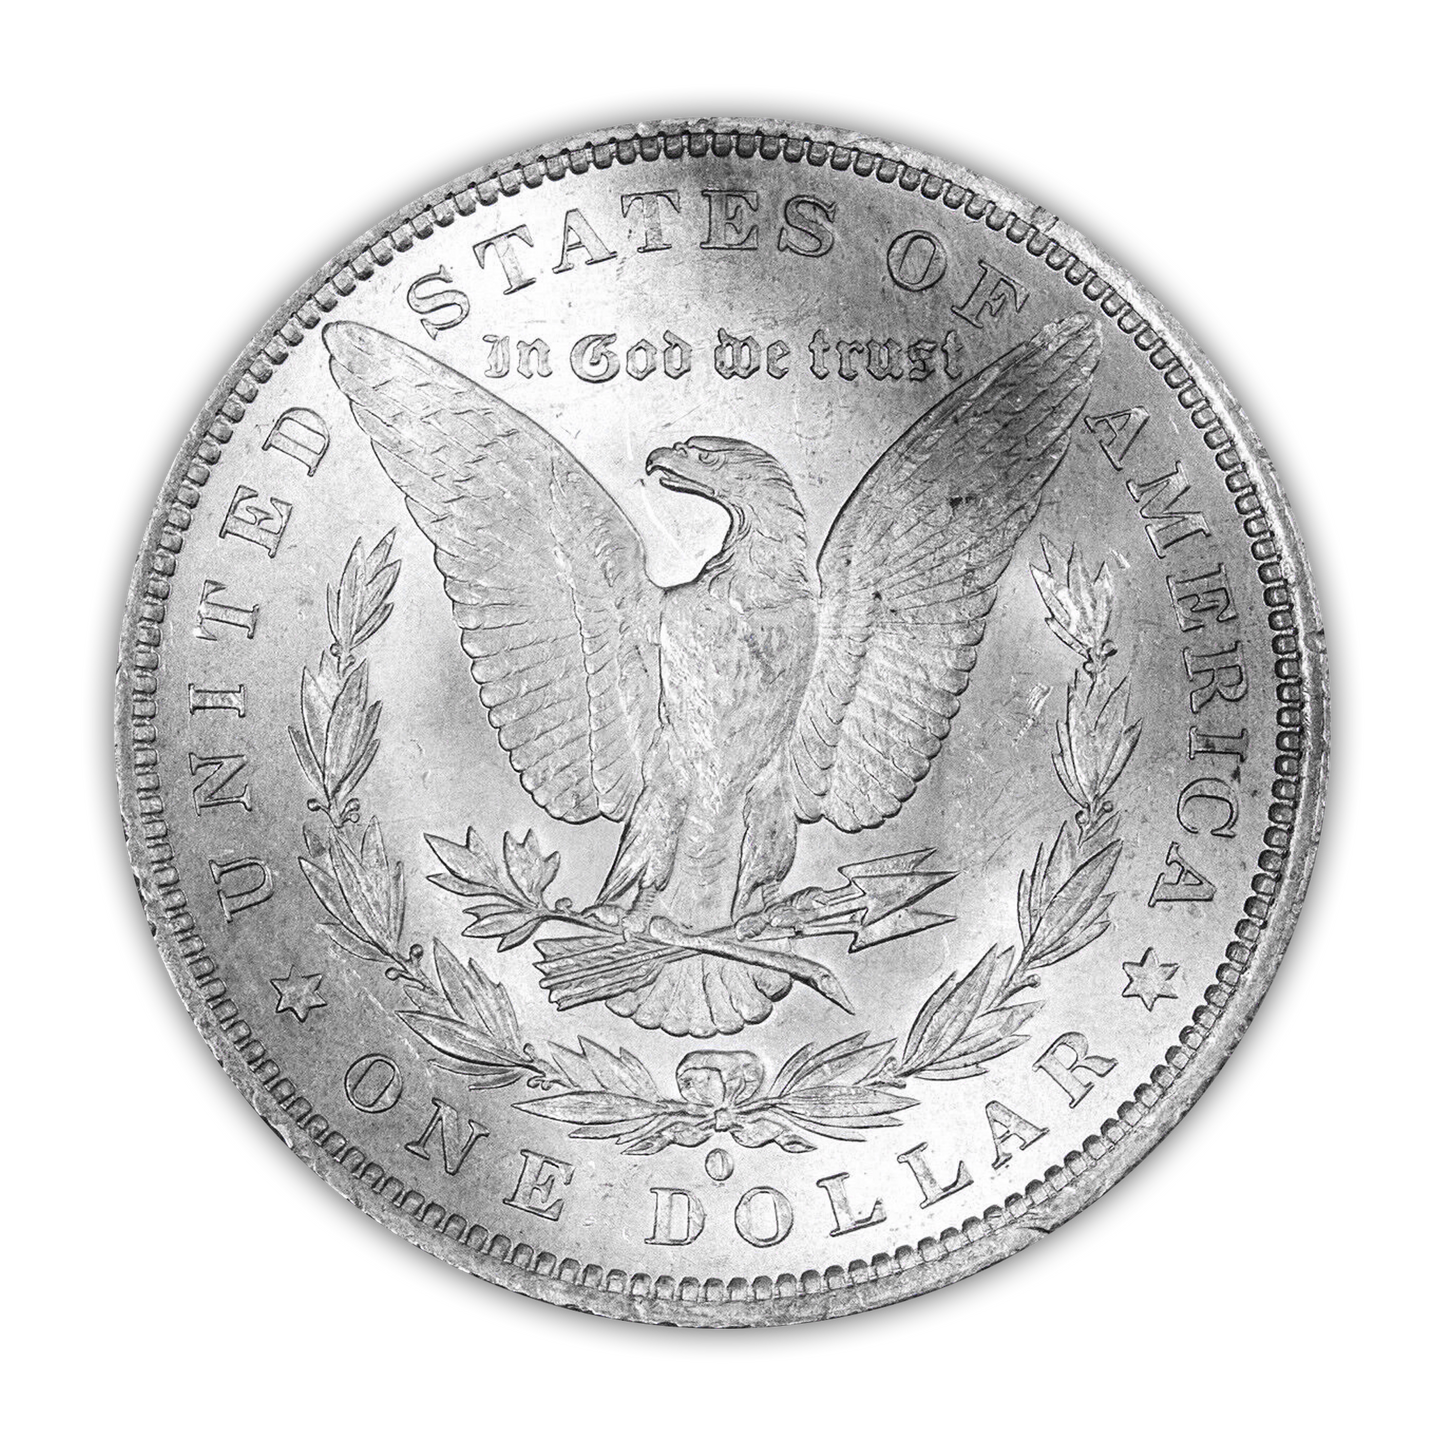 1884 Morgan Silver Dollar New Orleans - Brilliant Uncirculated